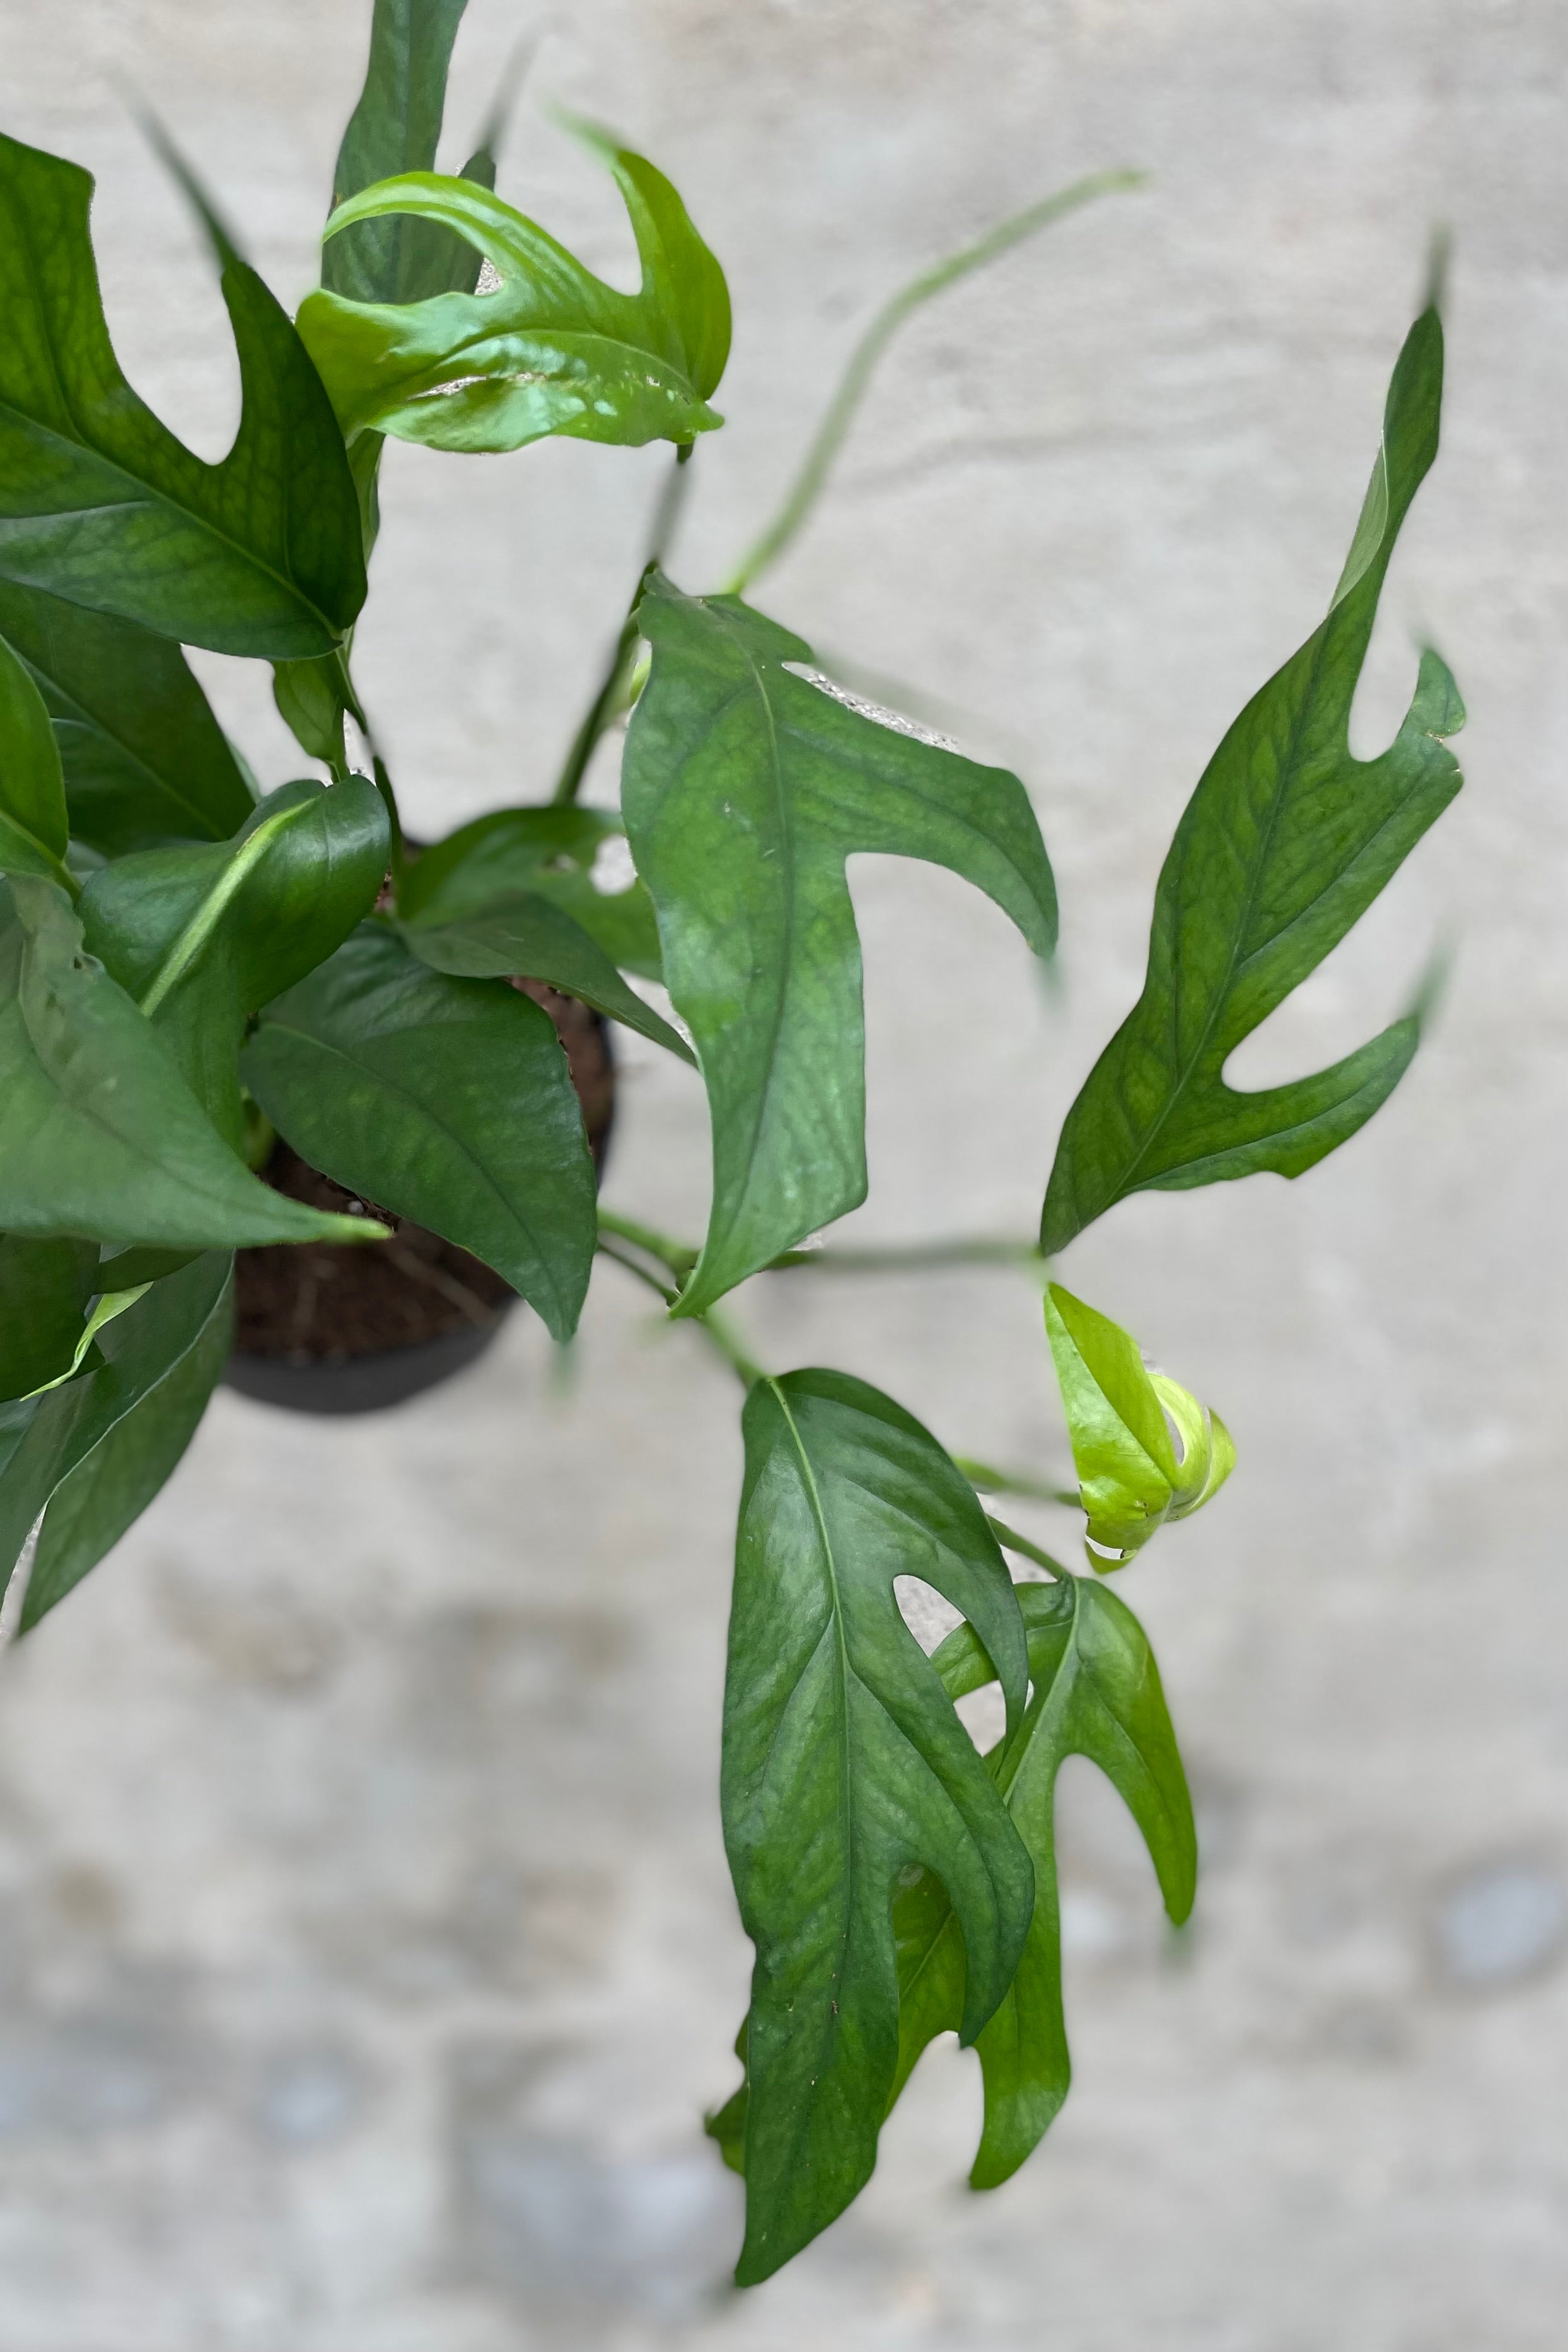 Epipremnum Pinnatum Mint Juvenile plant - The Sun Deck MNL